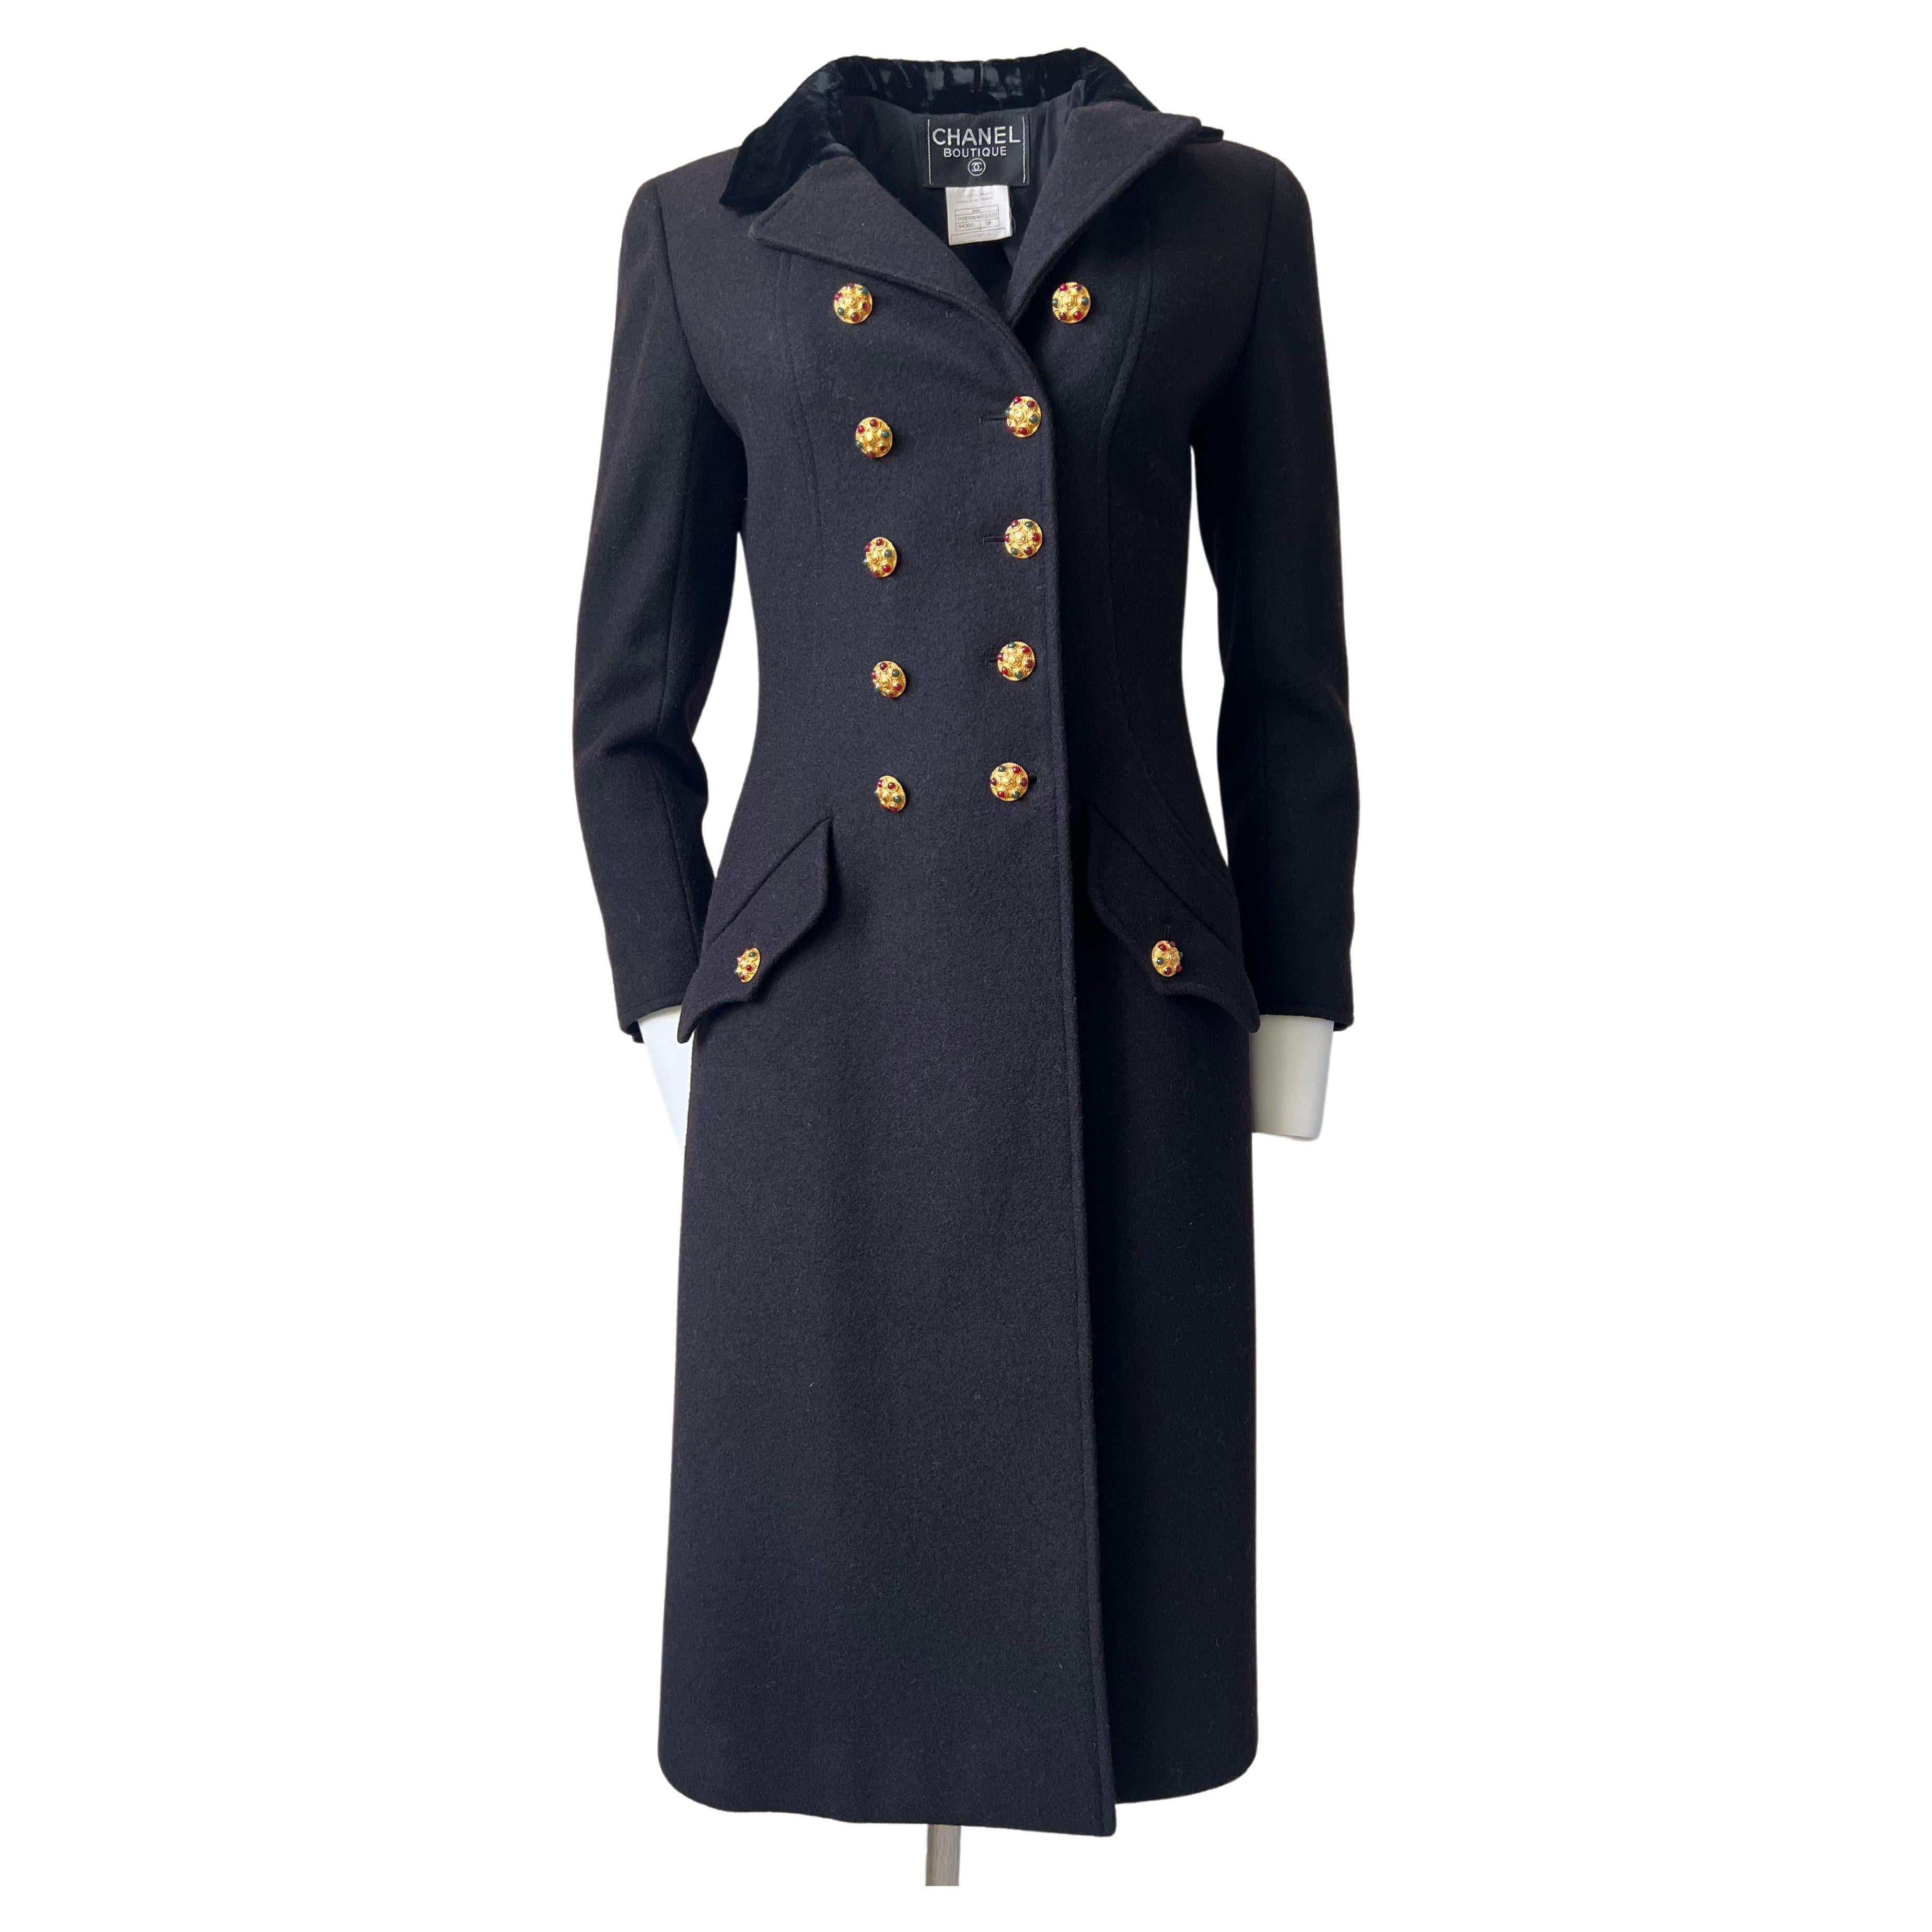 Black Wool and Velvet  Officier Coat, Gripoix Jewels Buttons, Chanel  1996 A  For Sale